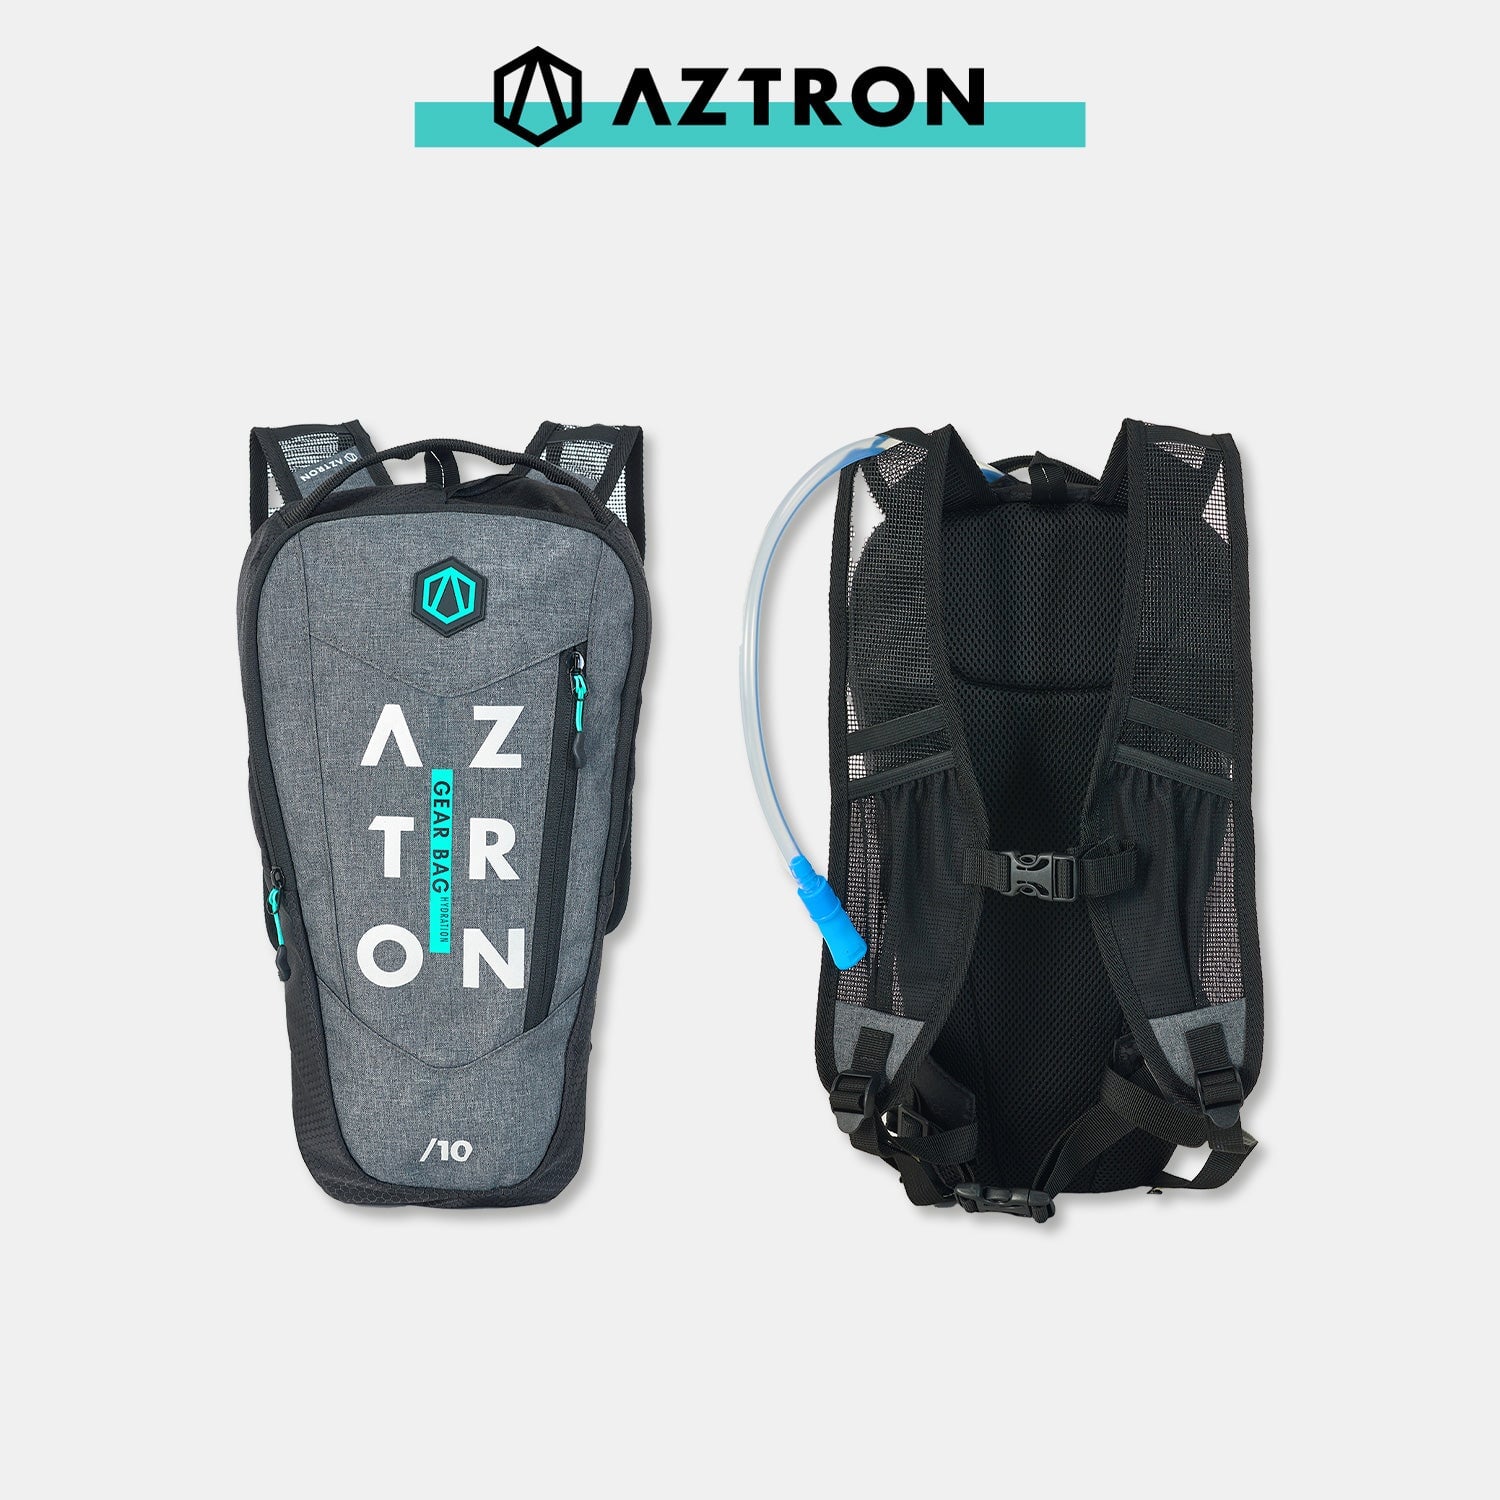 AZTRON HYDRATION BAG